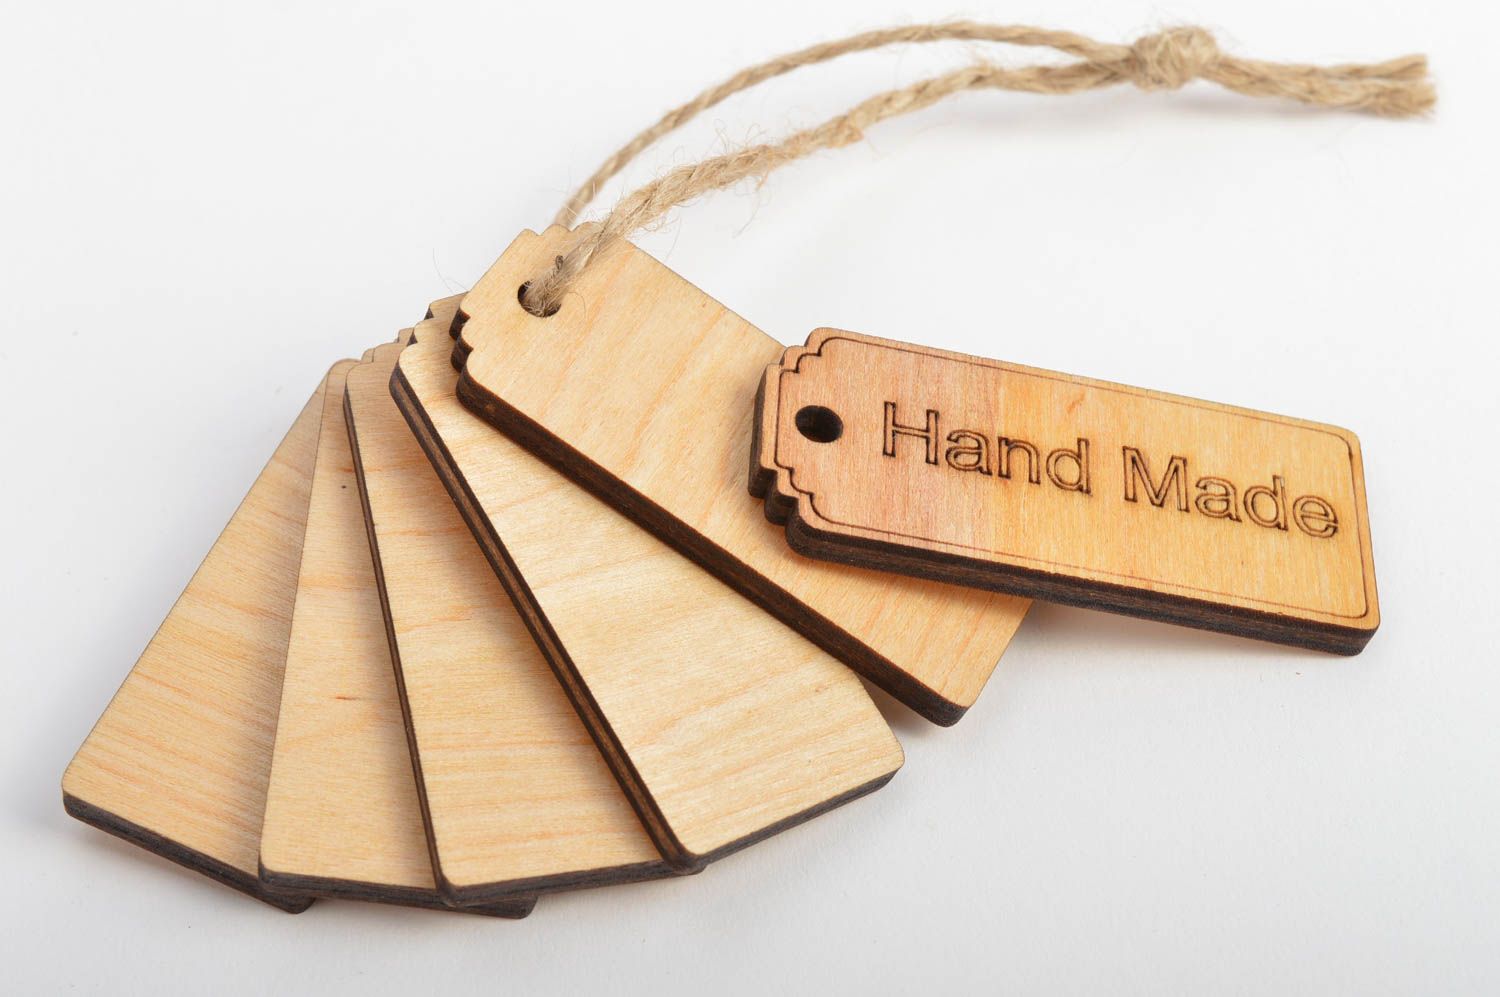 Handgemachter Schild Holz Rohling zum Bemalen mit Beschriftung Hand Made schön foto 1